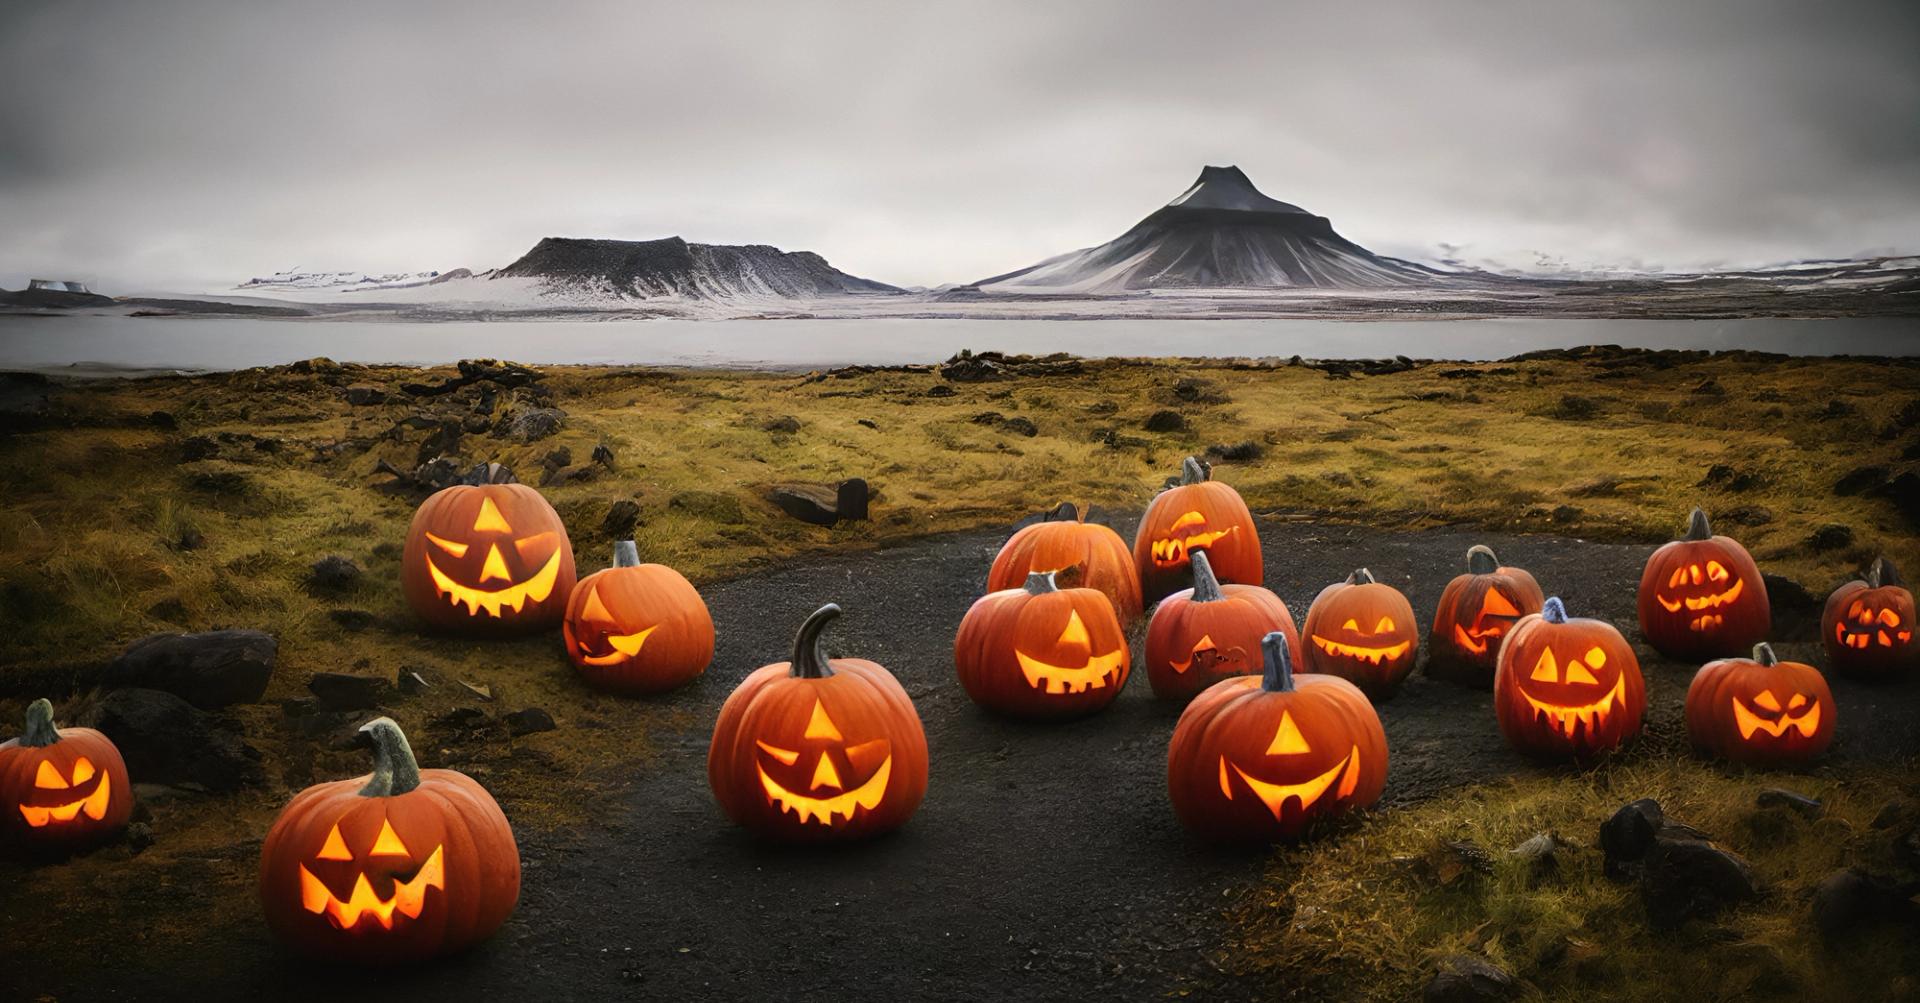 Halloween pumpkins sitting near mountains in Iceland